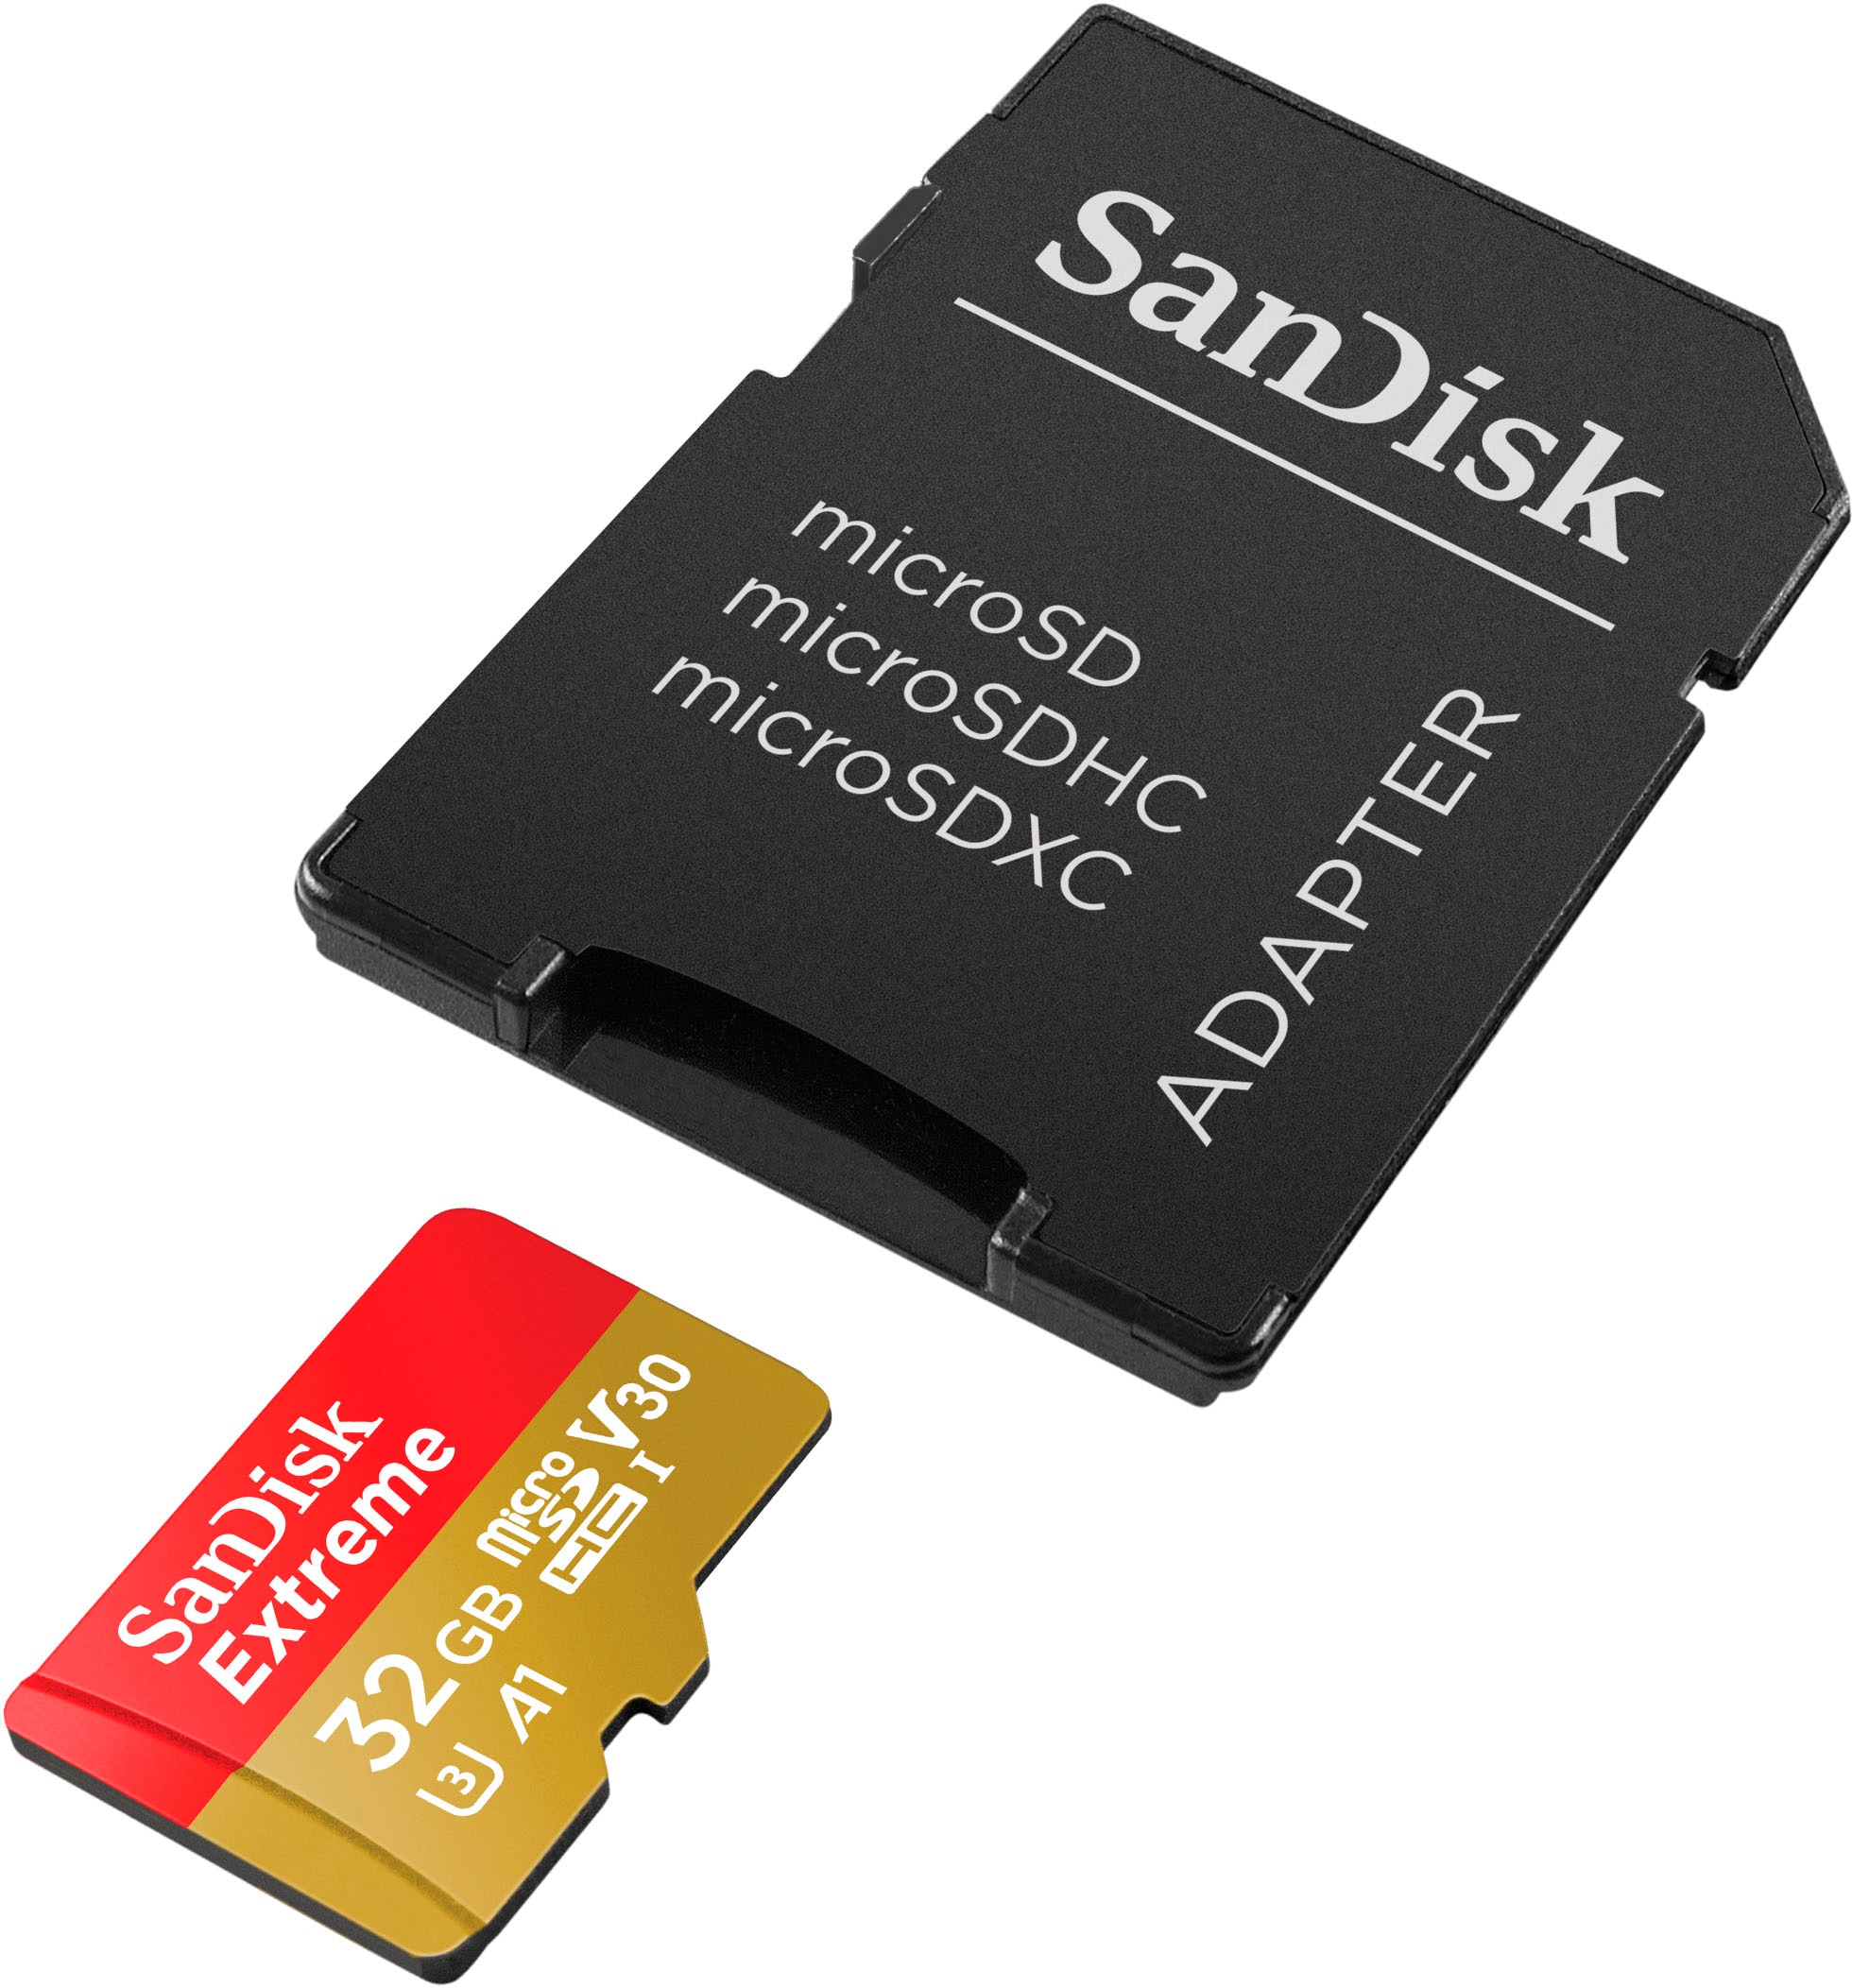 Sandisk Speicherkarte »Extreme microSDHC«, (UHS Class 3 100 MB/s Lesegeschwindigkeit), SD-Adapter, Rescue Pro Deluxe